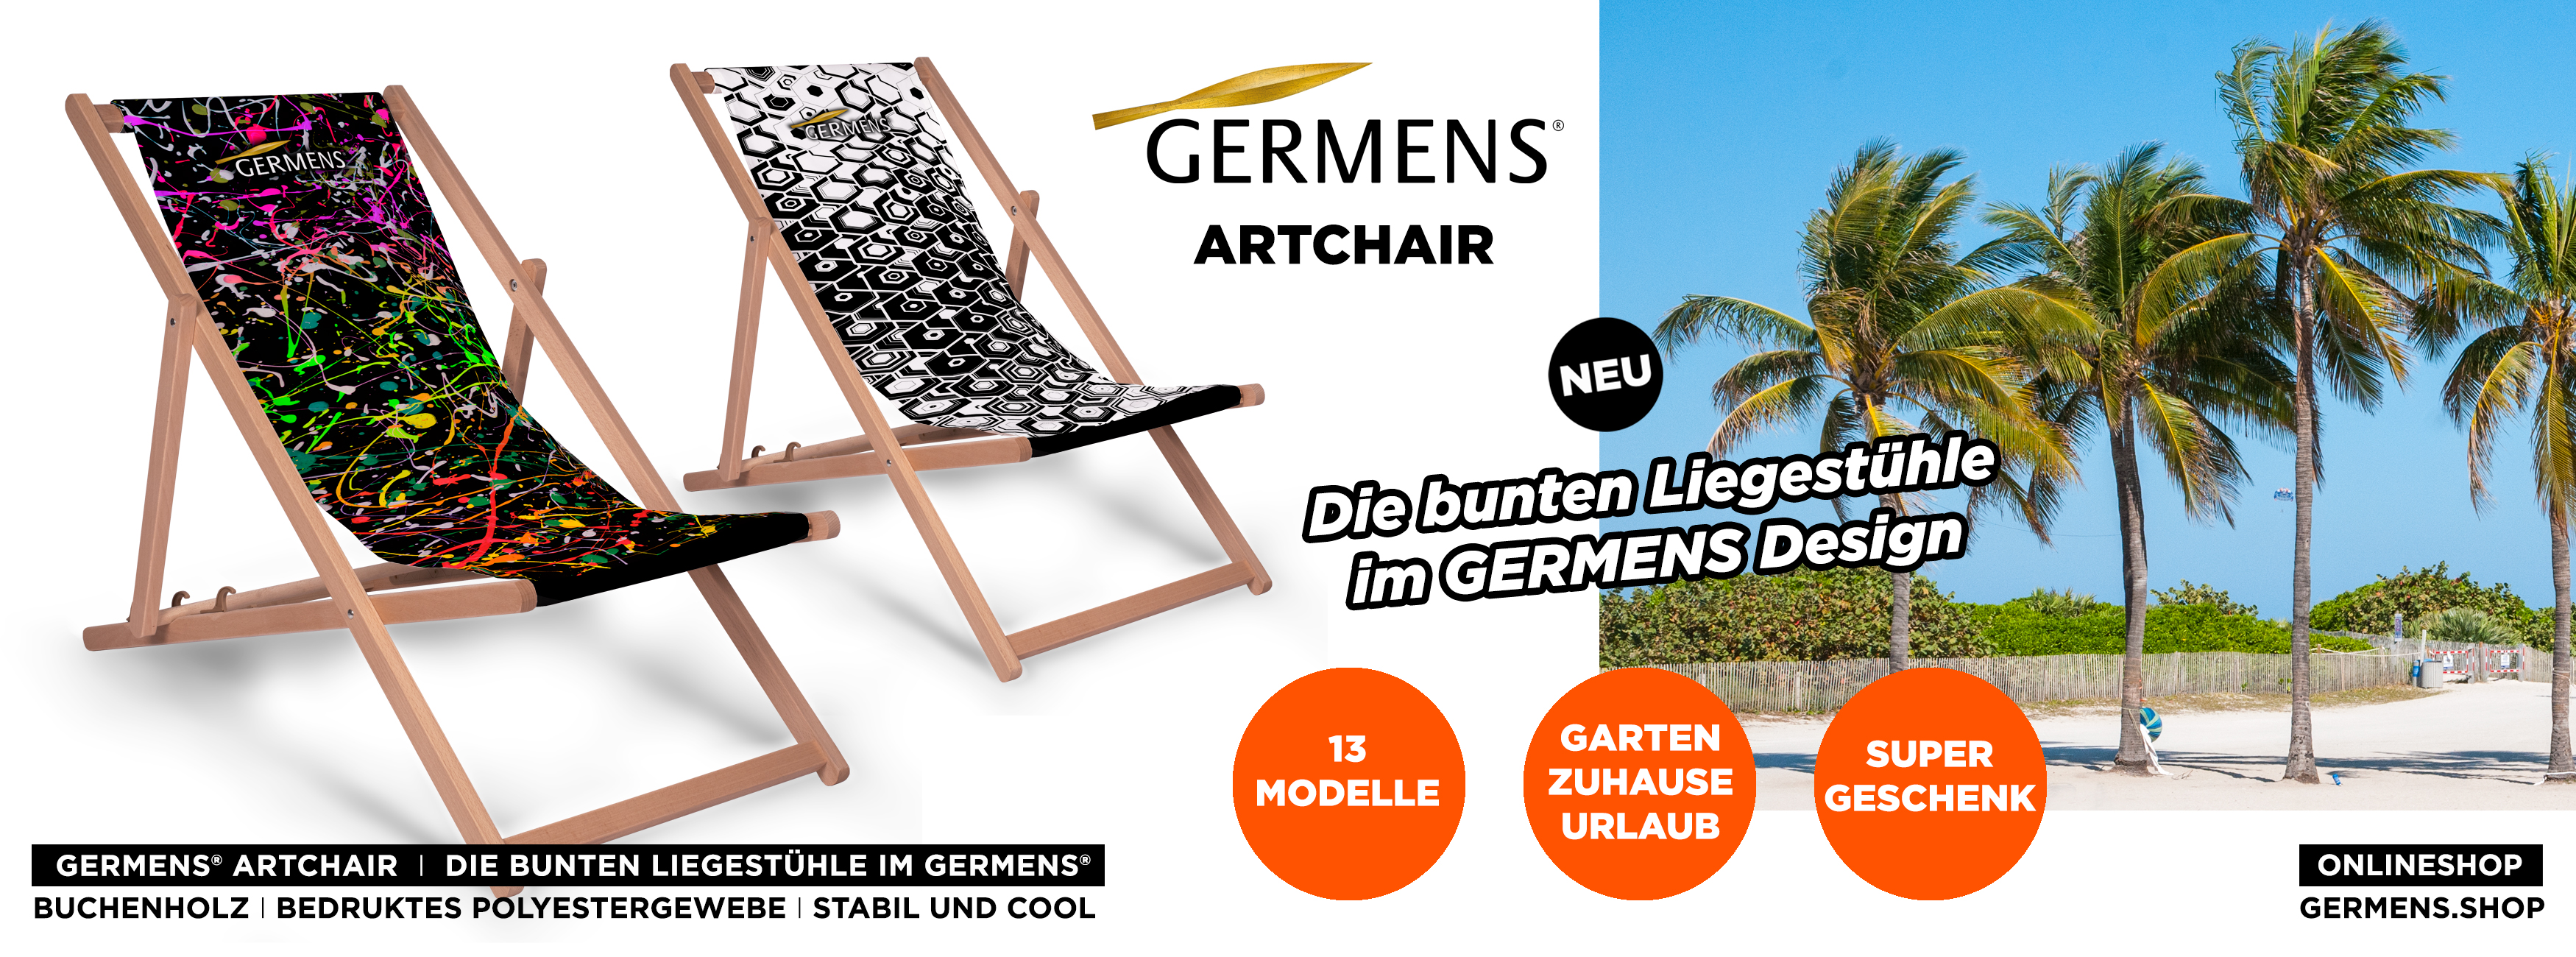 GERMENS® artchair - The cool deck chair for summer